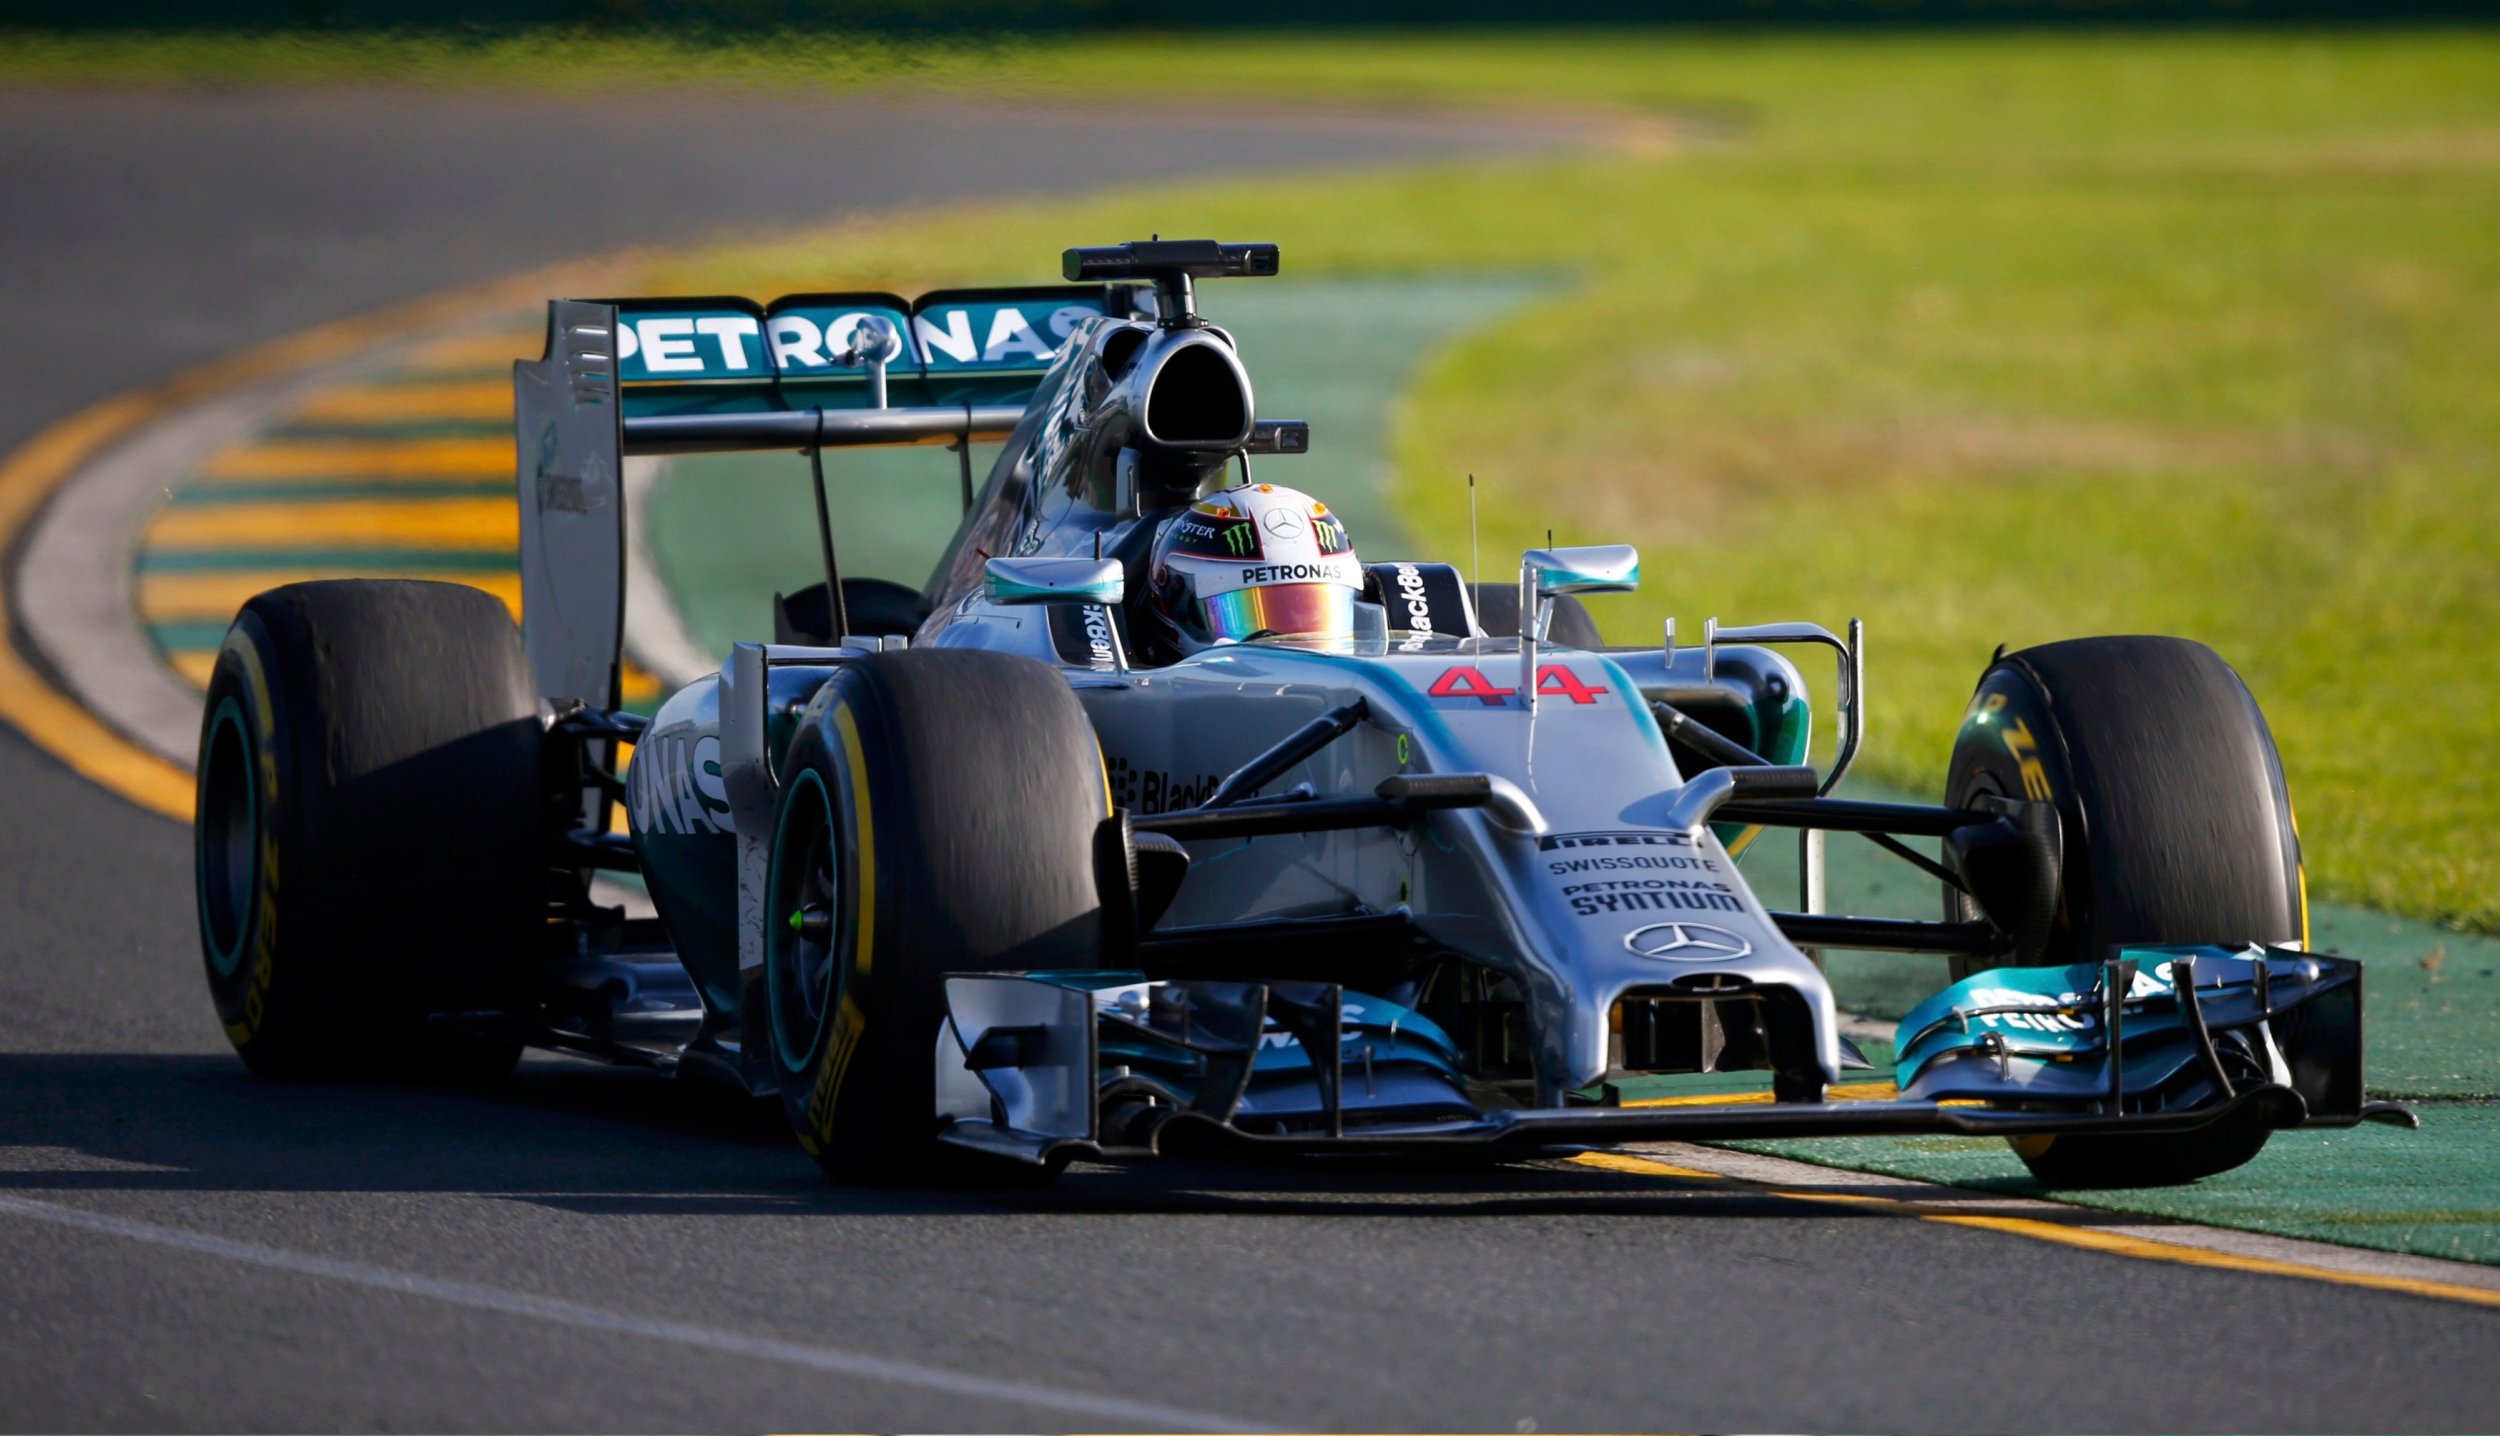 2014 Formula 1 Australian GP Qualifying Live Stream Online Will